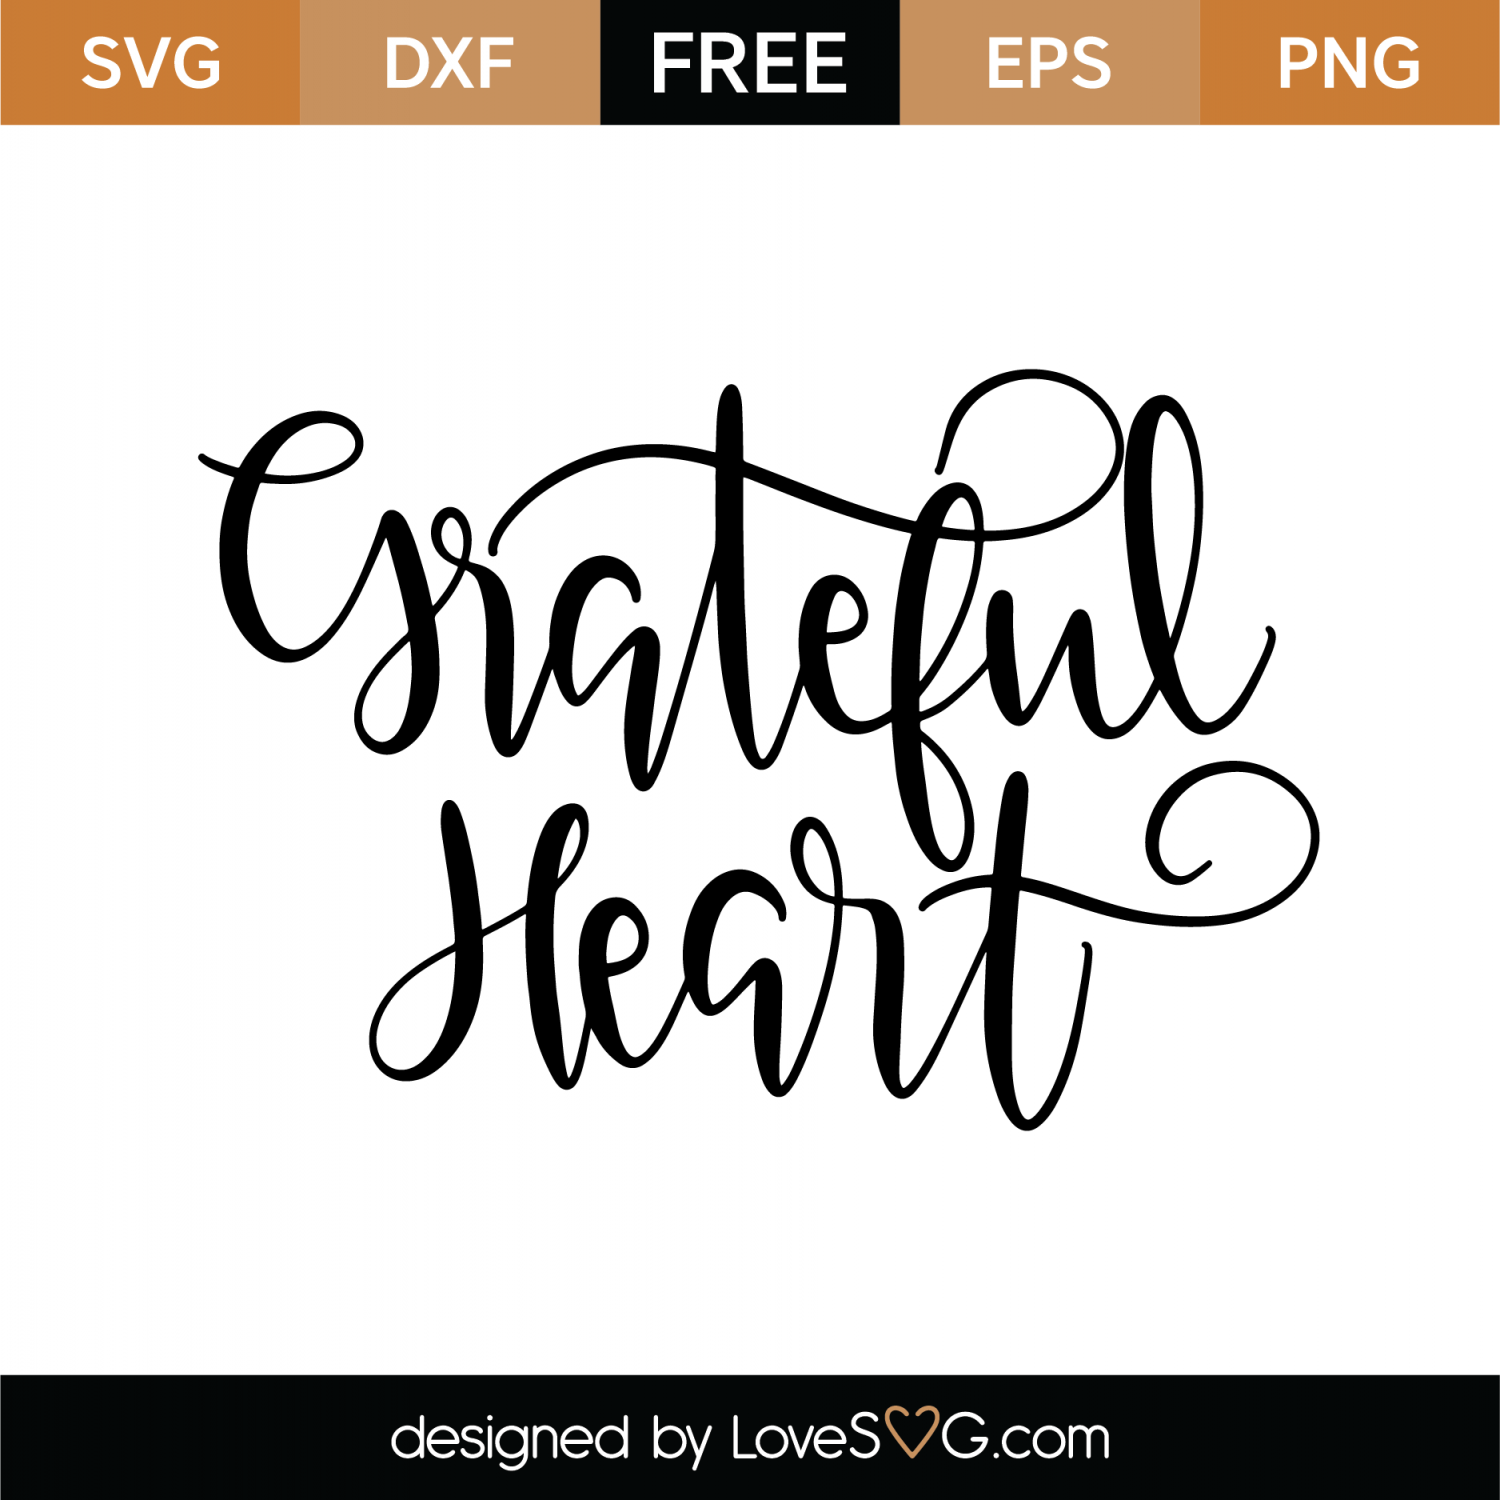 Download Free Grateful Heart SVG Cut File | Lovesvg.com